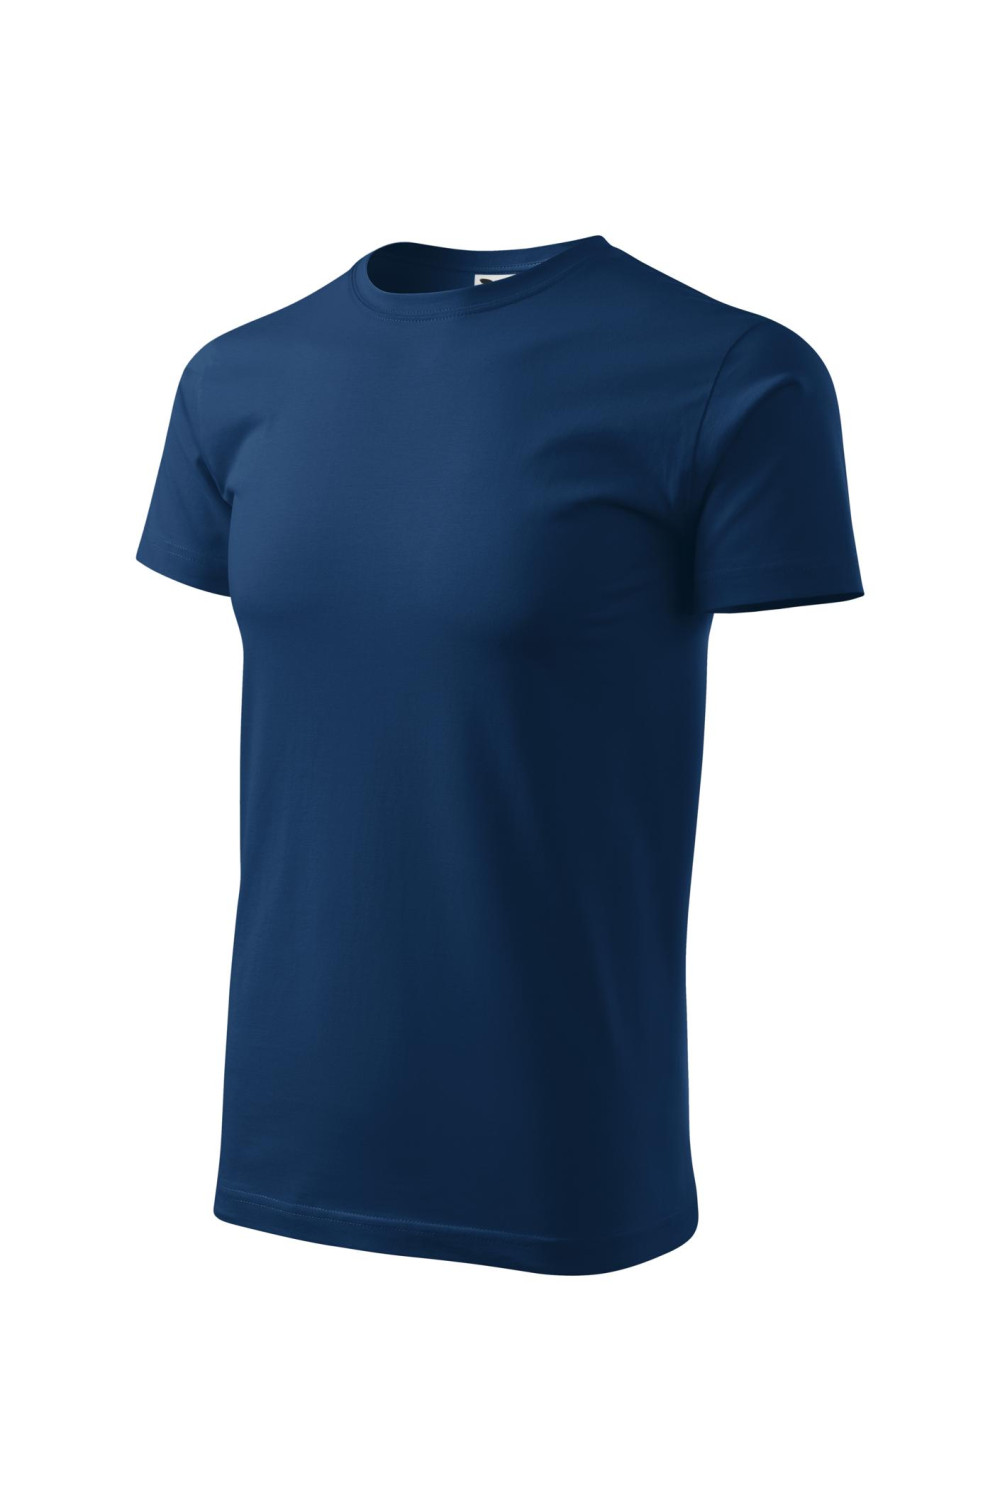 Koszulka męska 100% bawełna BASIC 129  kolor ciemnoniebieski